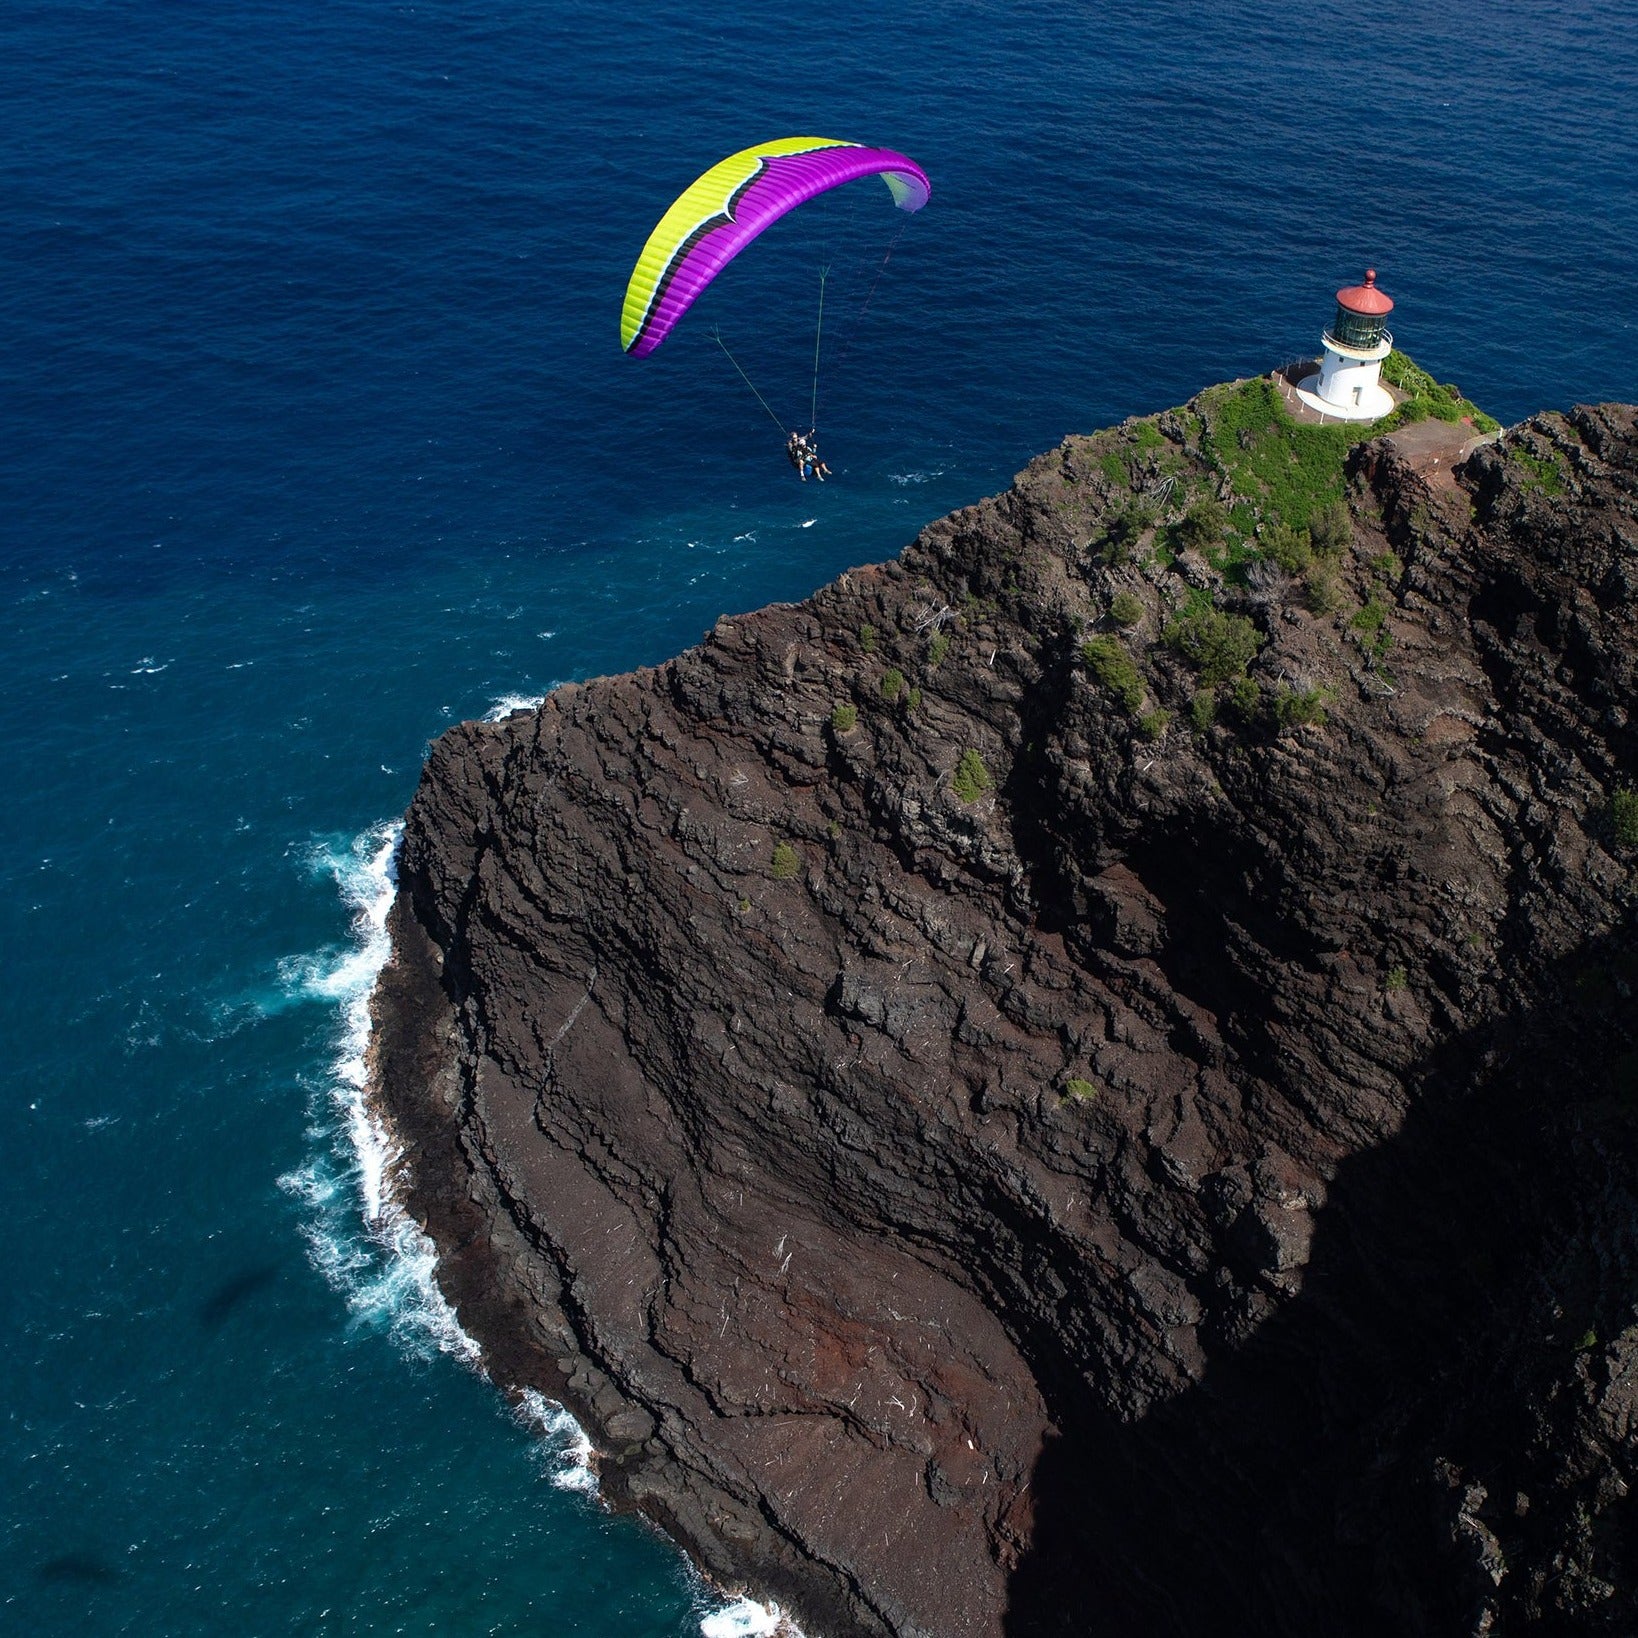 paragliding tandem flights - Northern Beaches Sydney